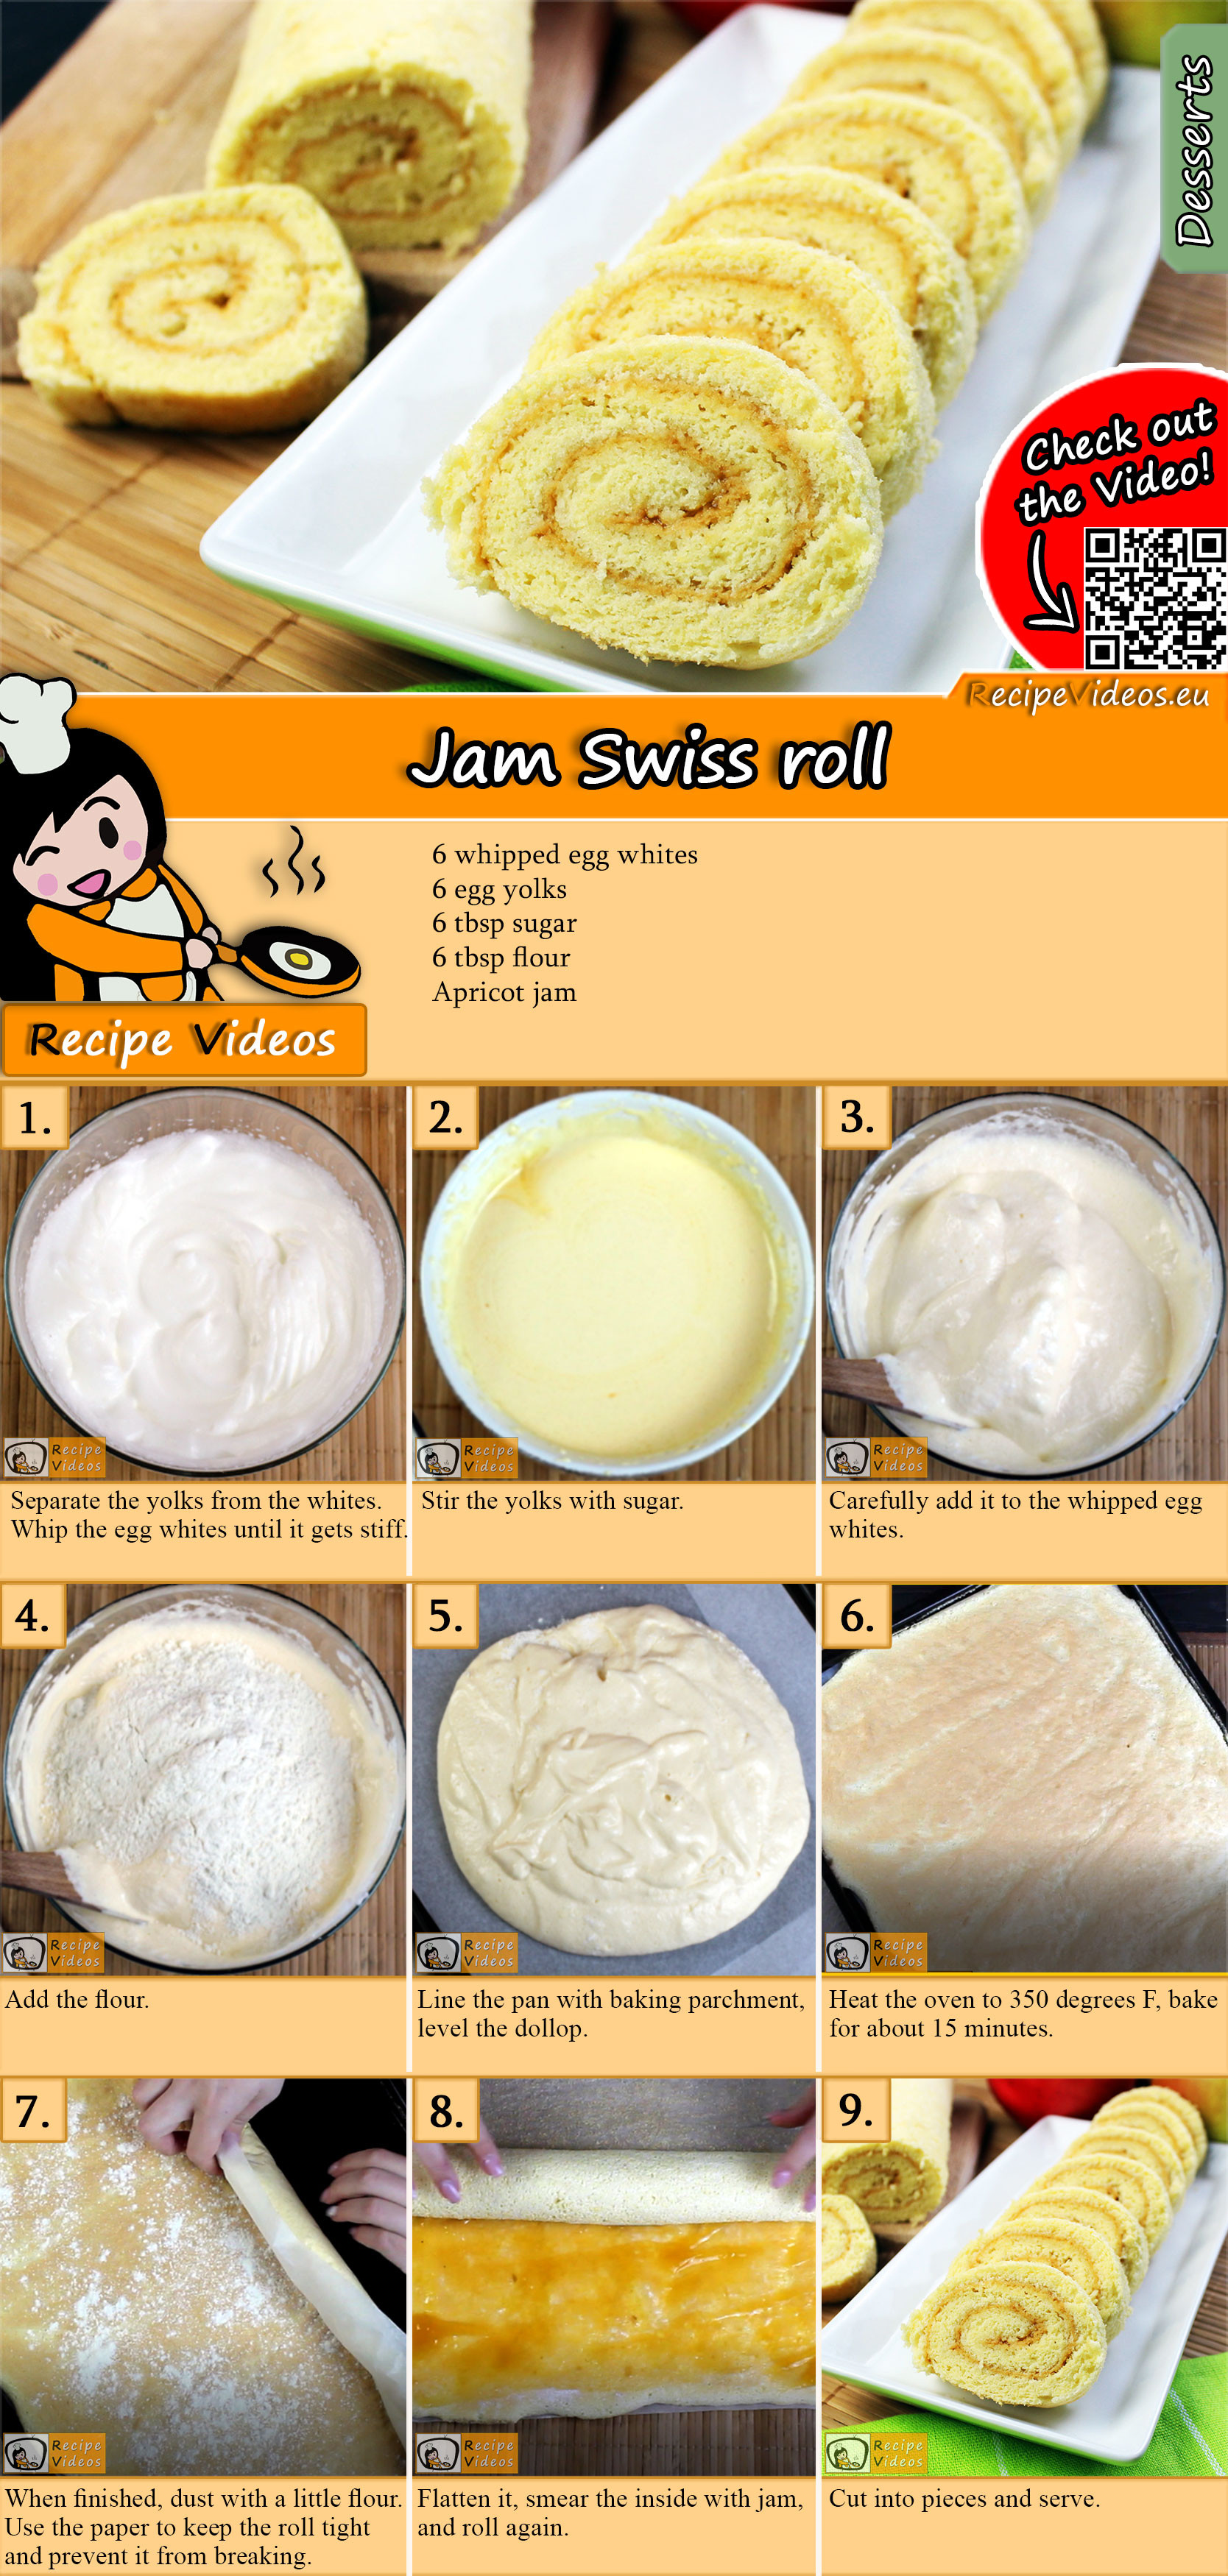 Jam Swiss roll recipe with video